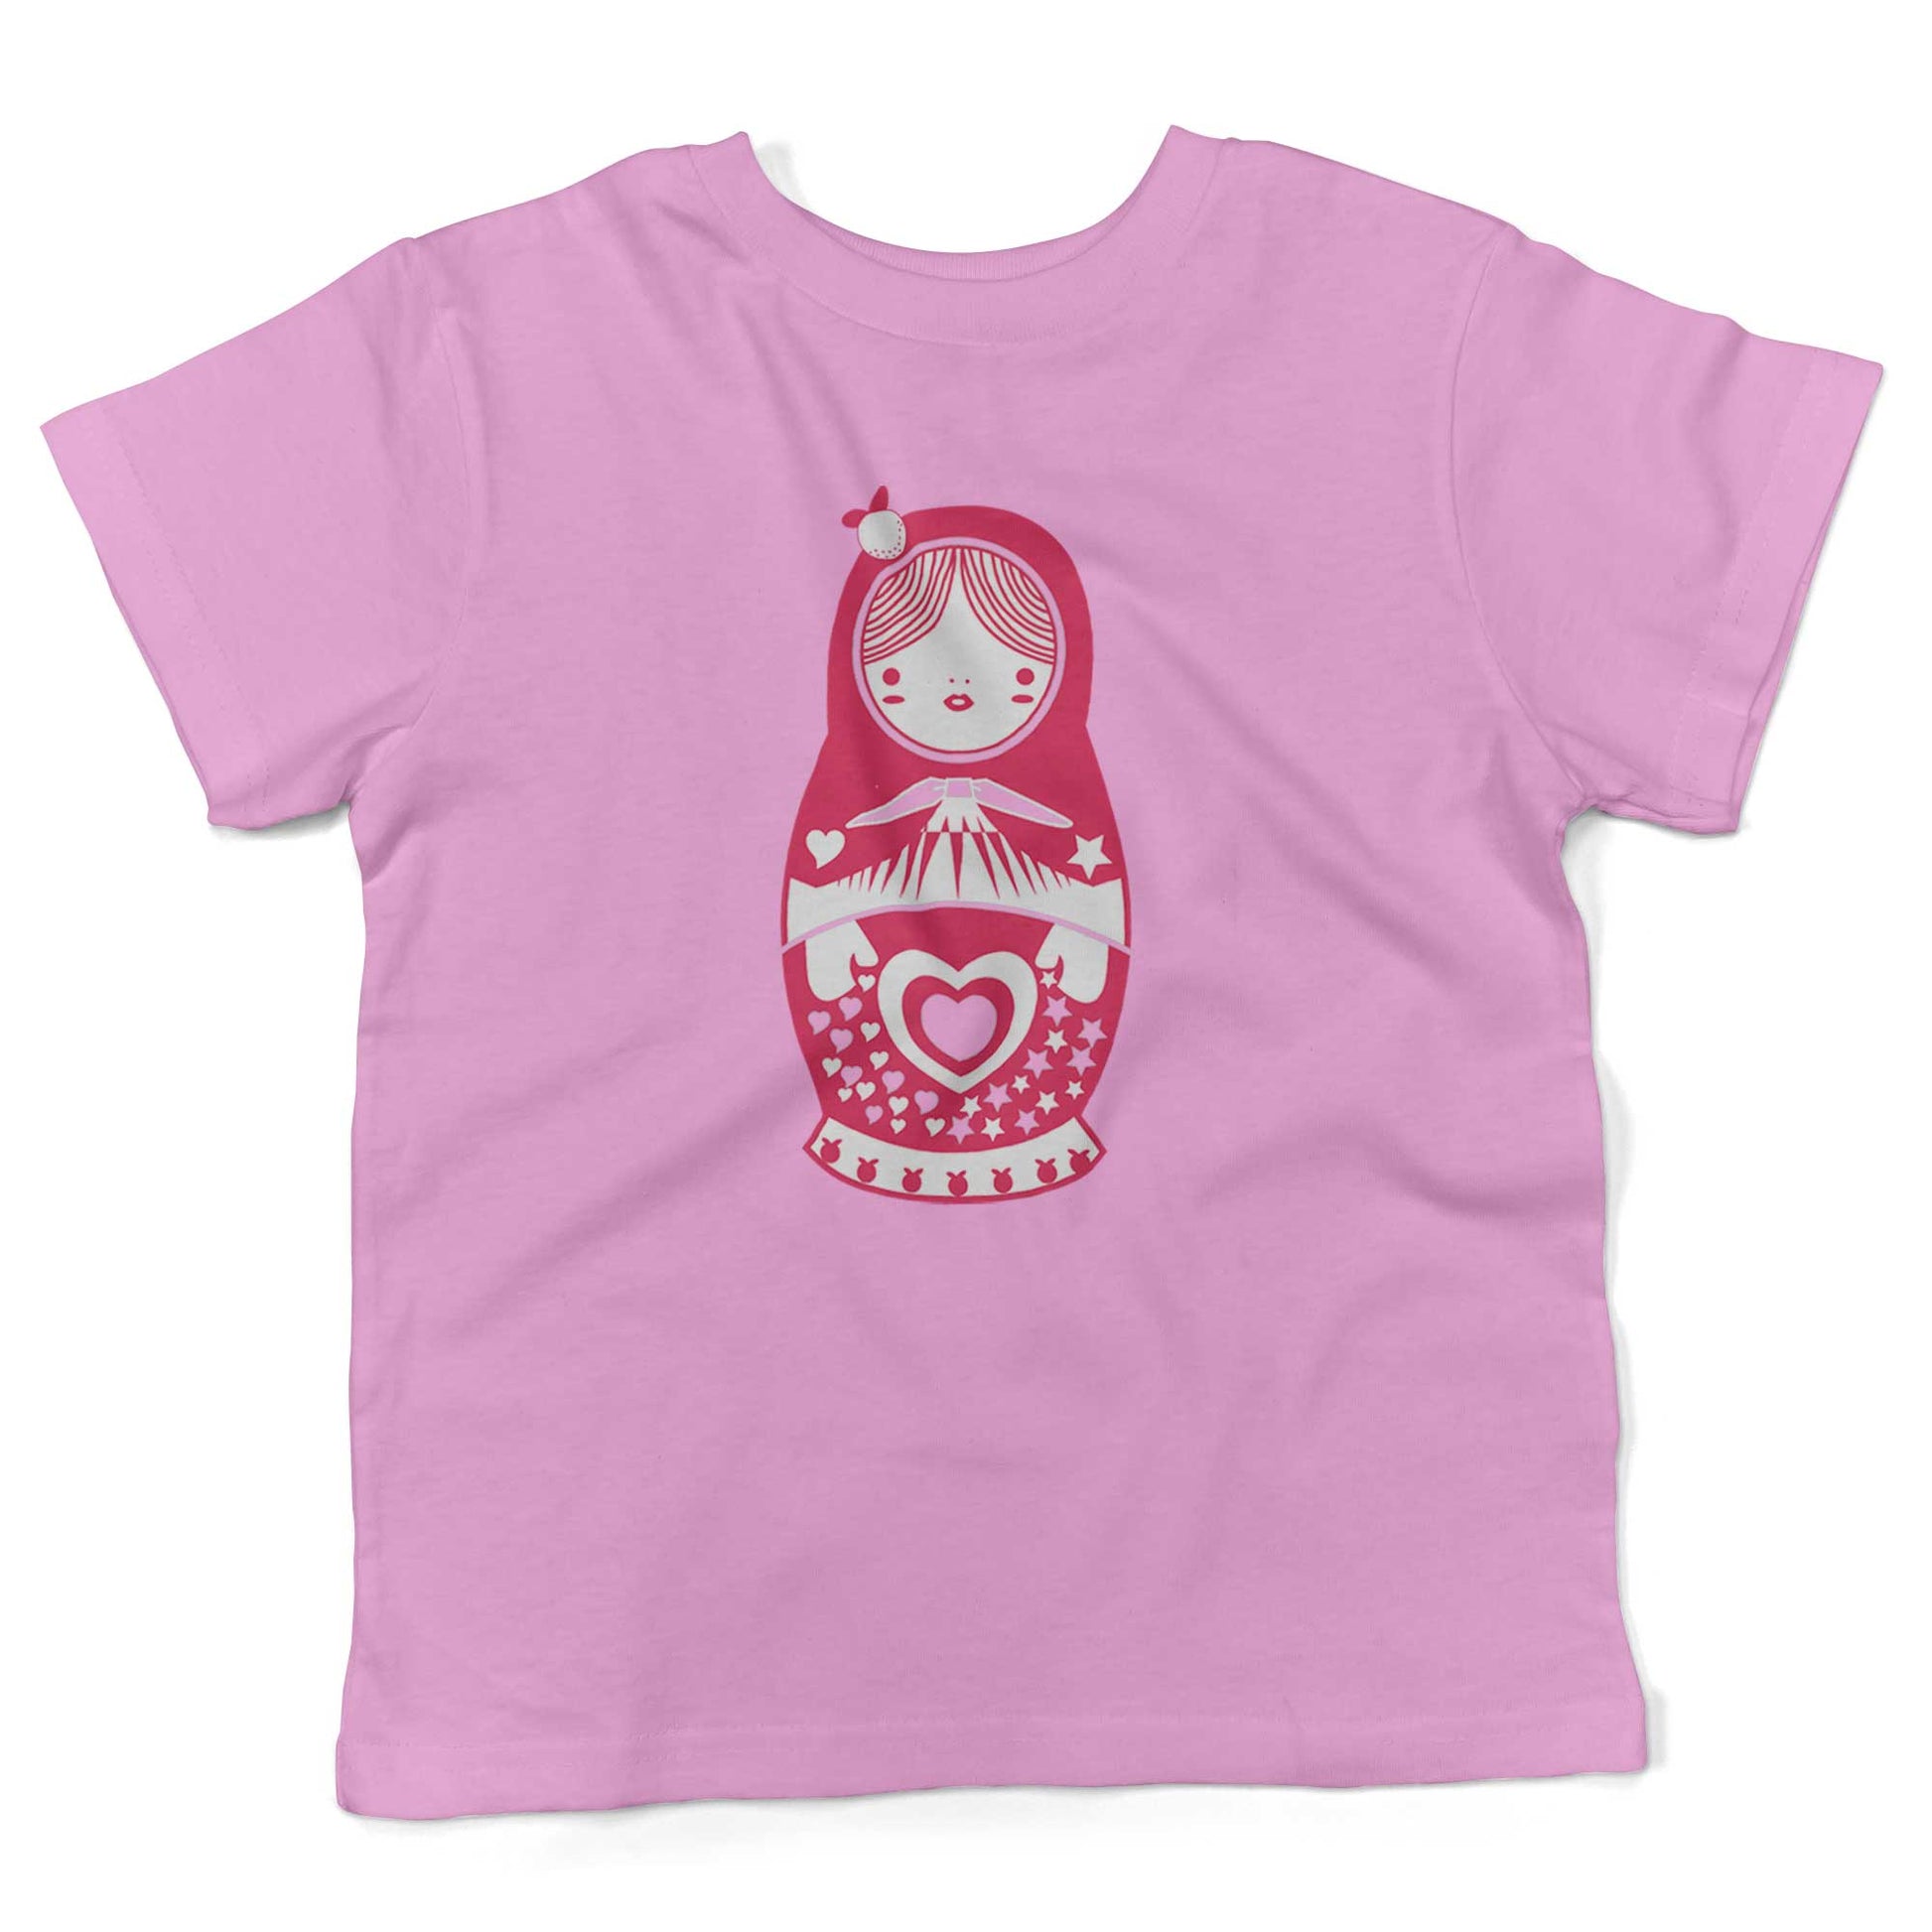 Russian Doll Toddler Shirt-Organic Pink-2T